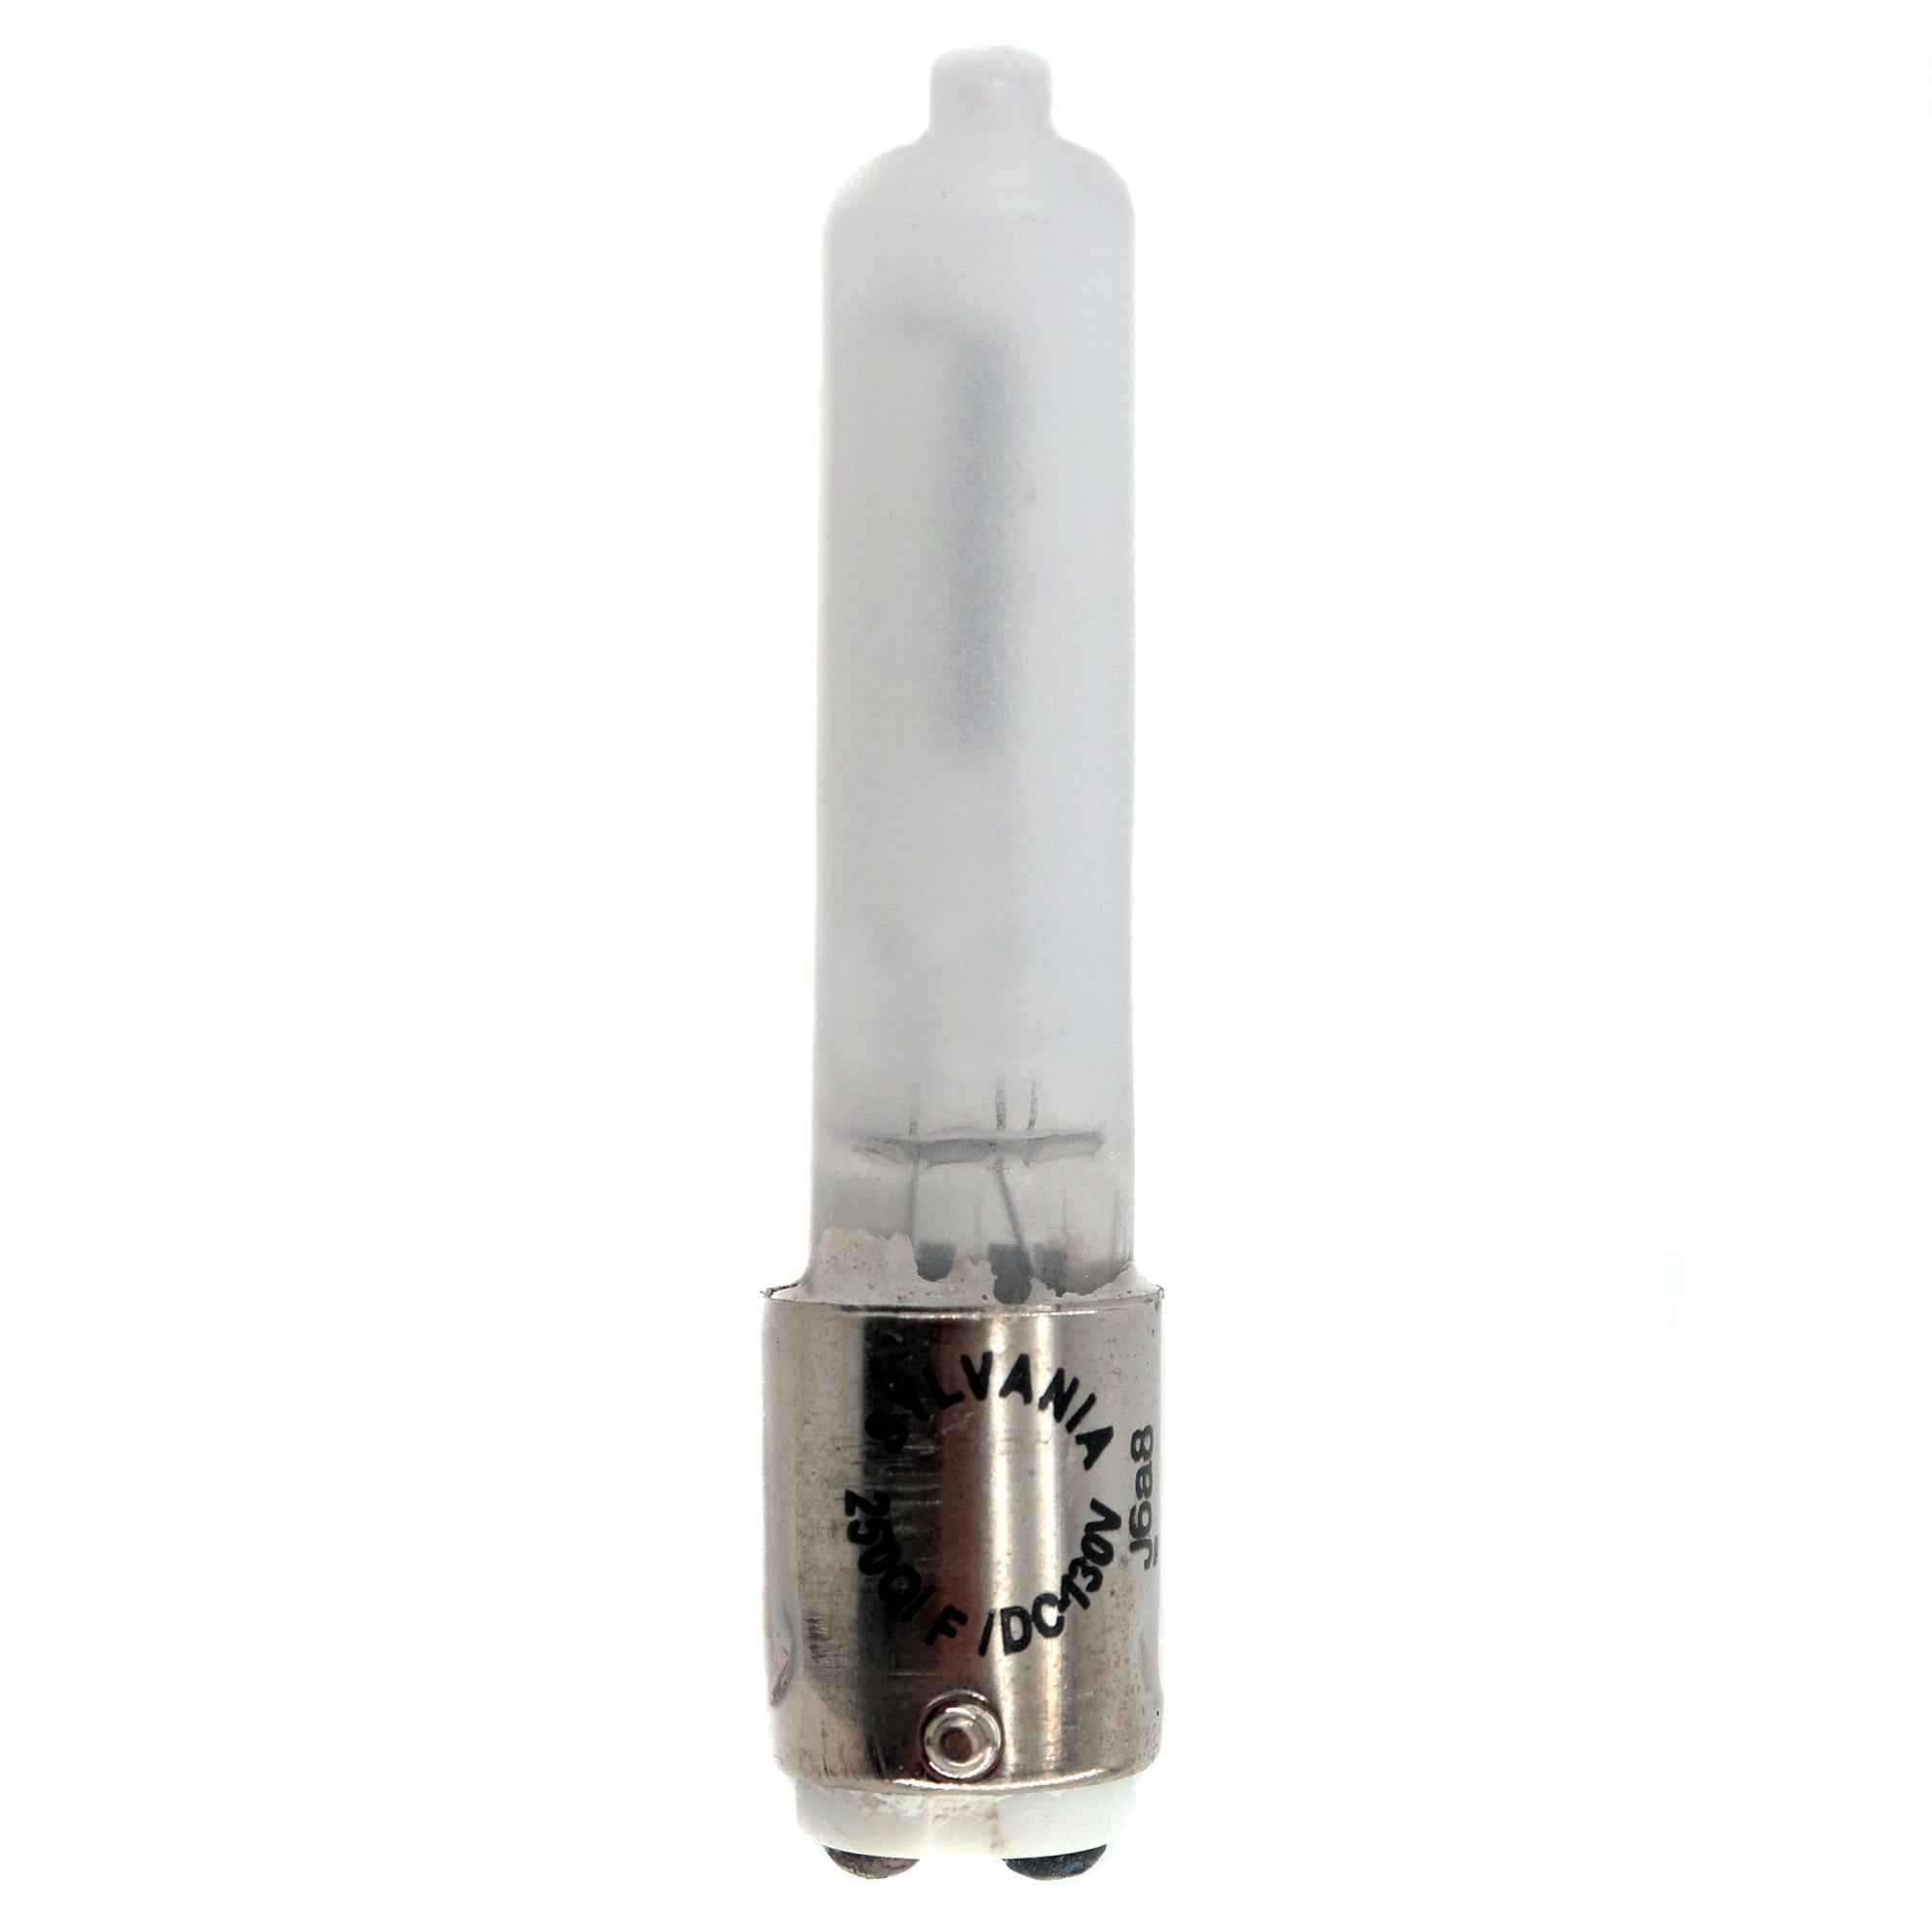 Replacement Bulb for Slant Fin Humidifiers GF-210 GF-200 GF-240g 